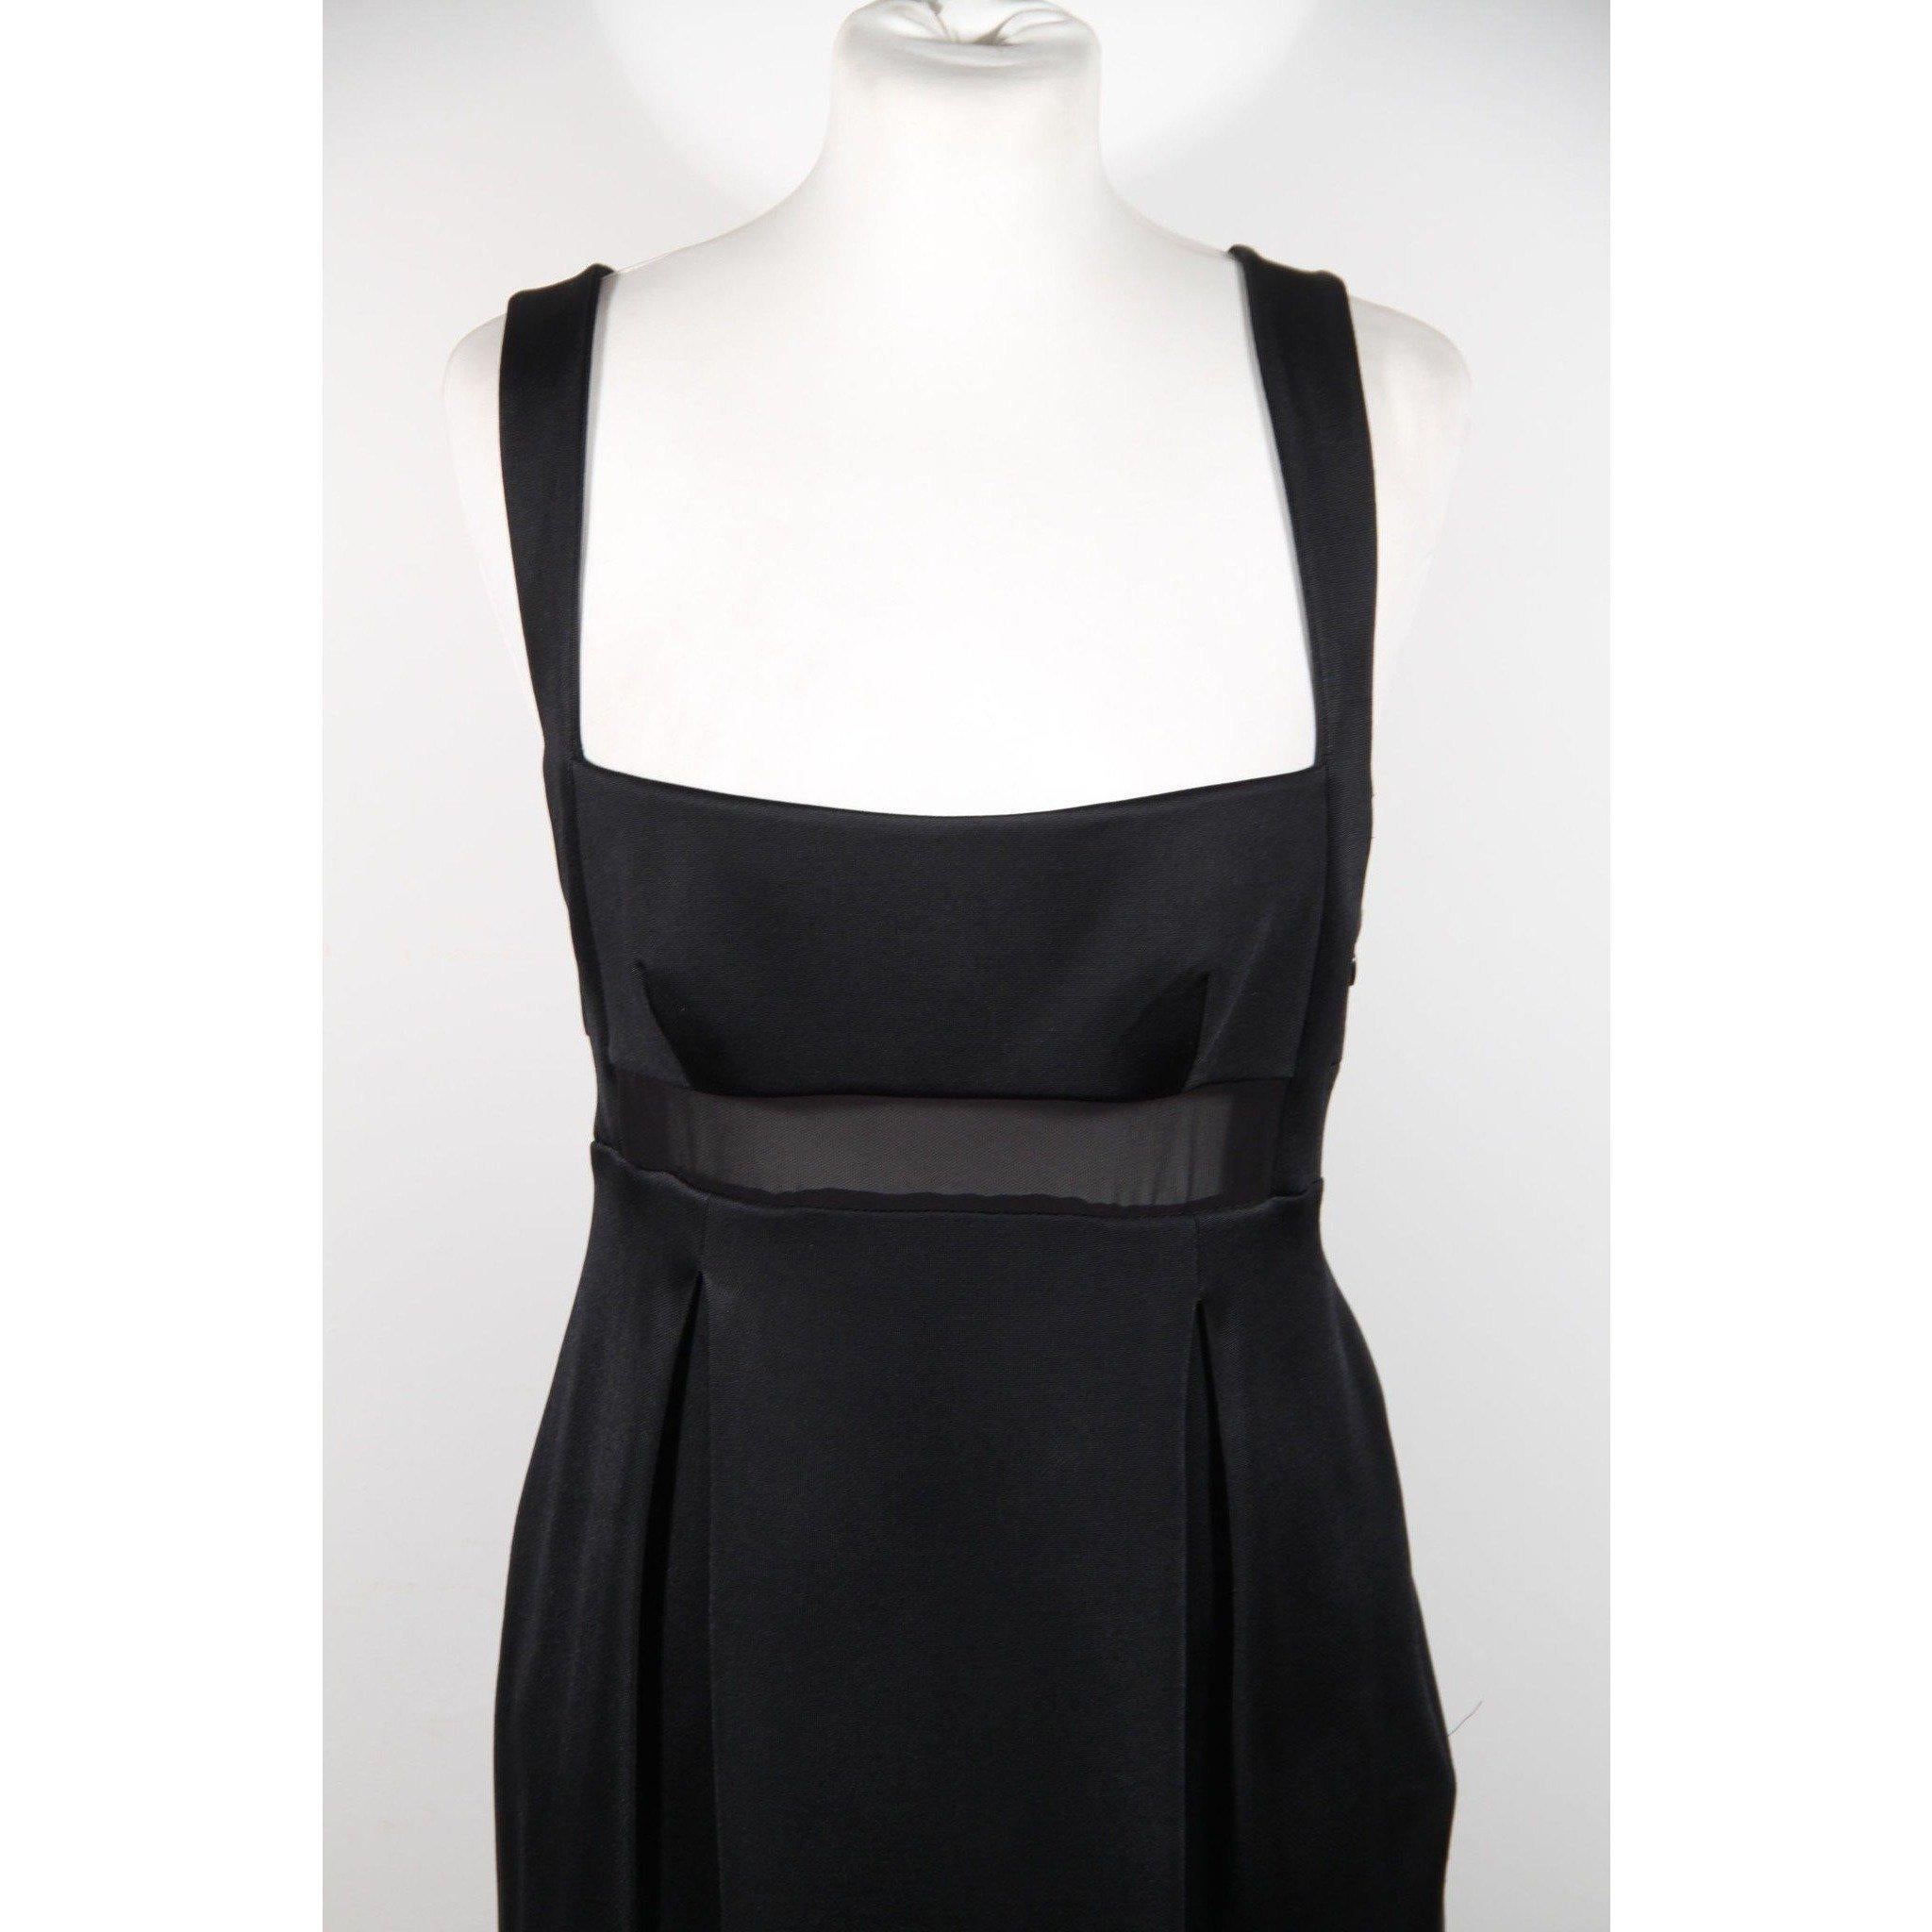 Versace Sleeveless Little Black Dress with Sheer Insert Size 40 1